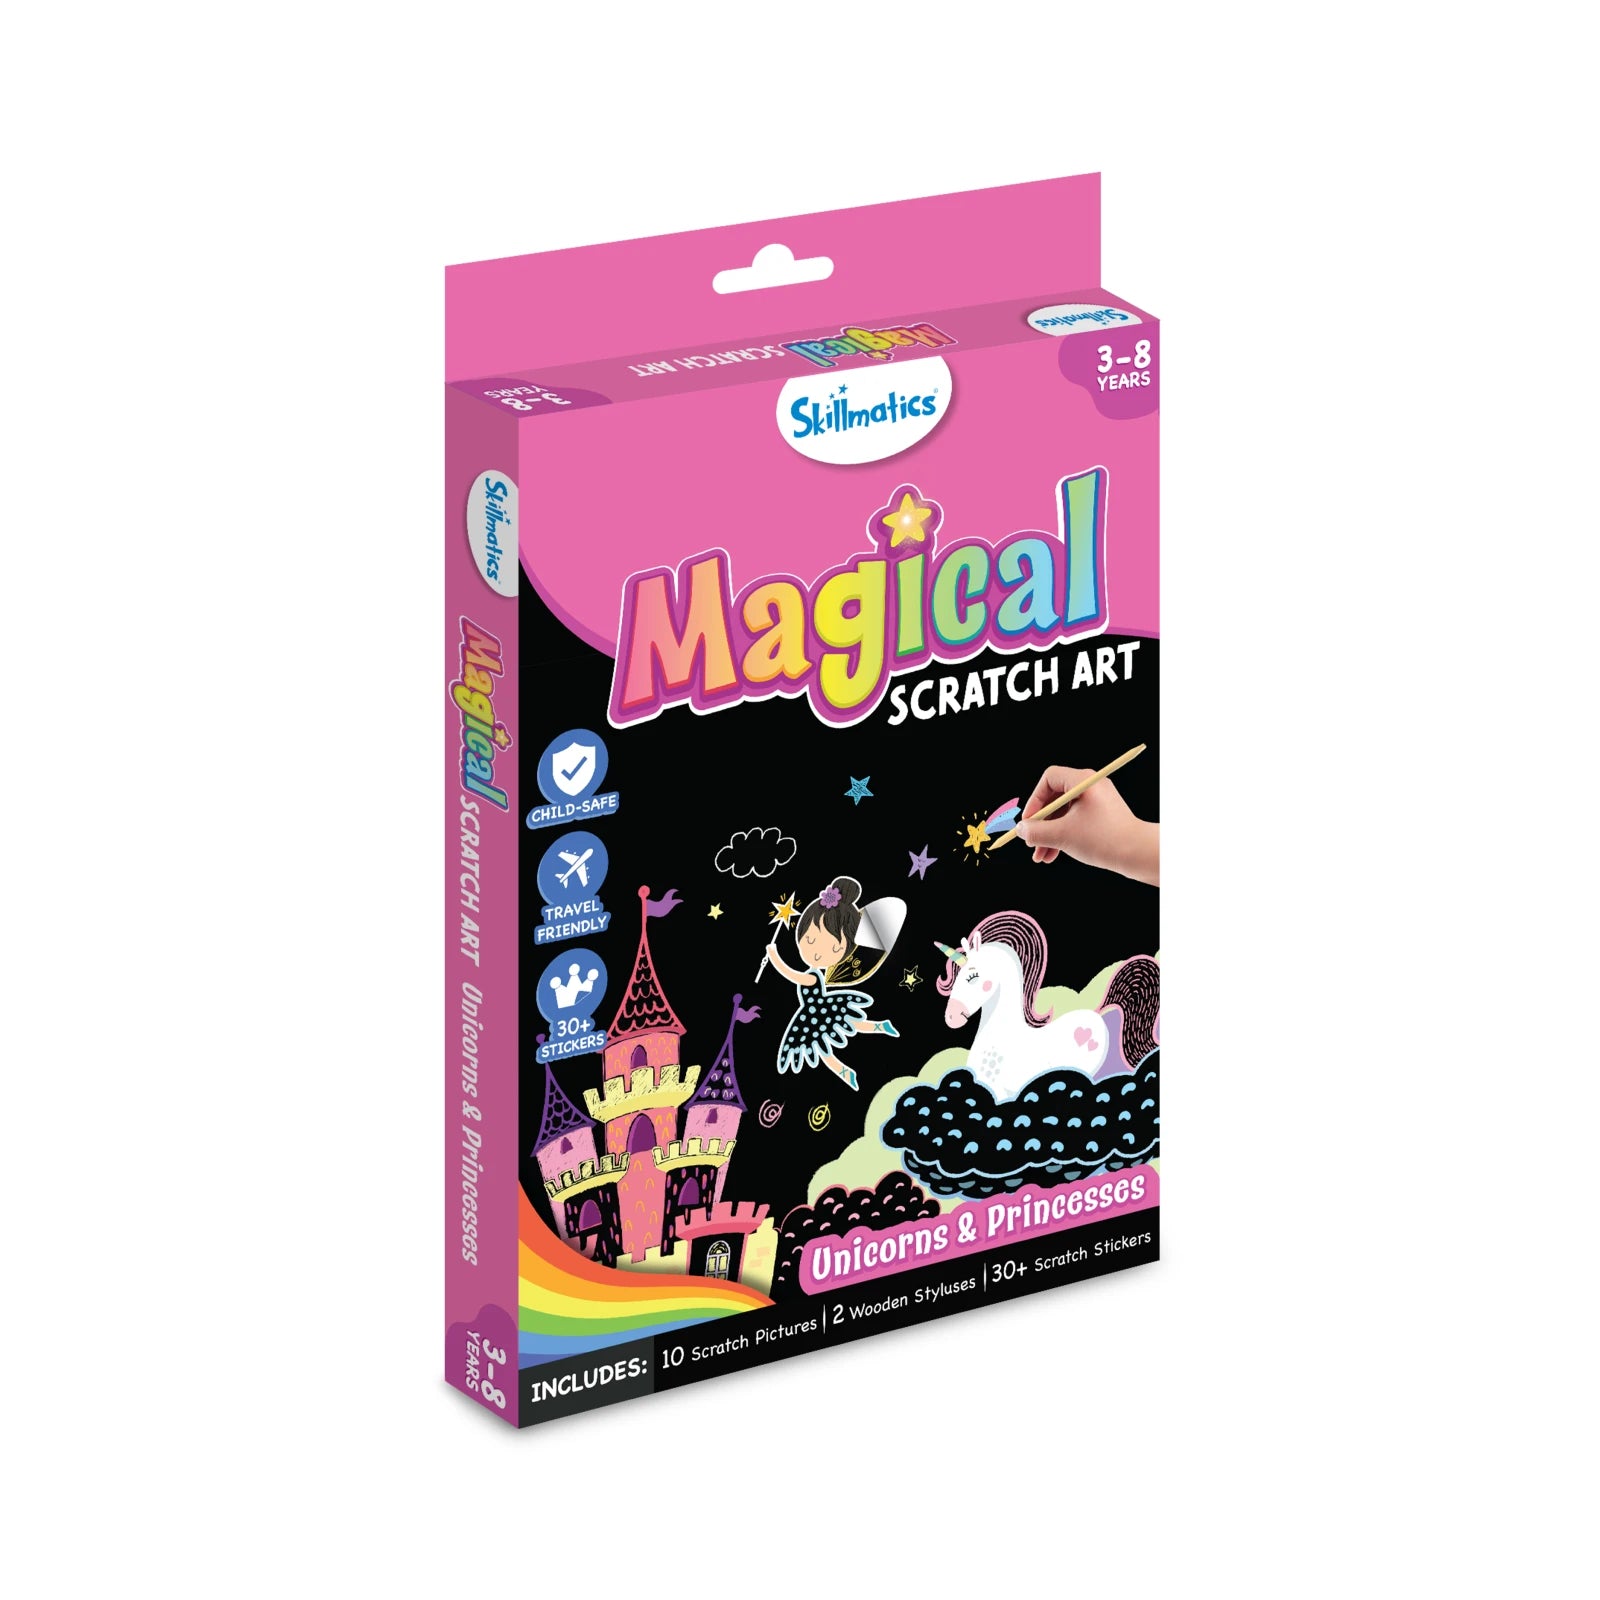 Magical Scratch Art Book: Unicorns & Princesses (ages 3-8)